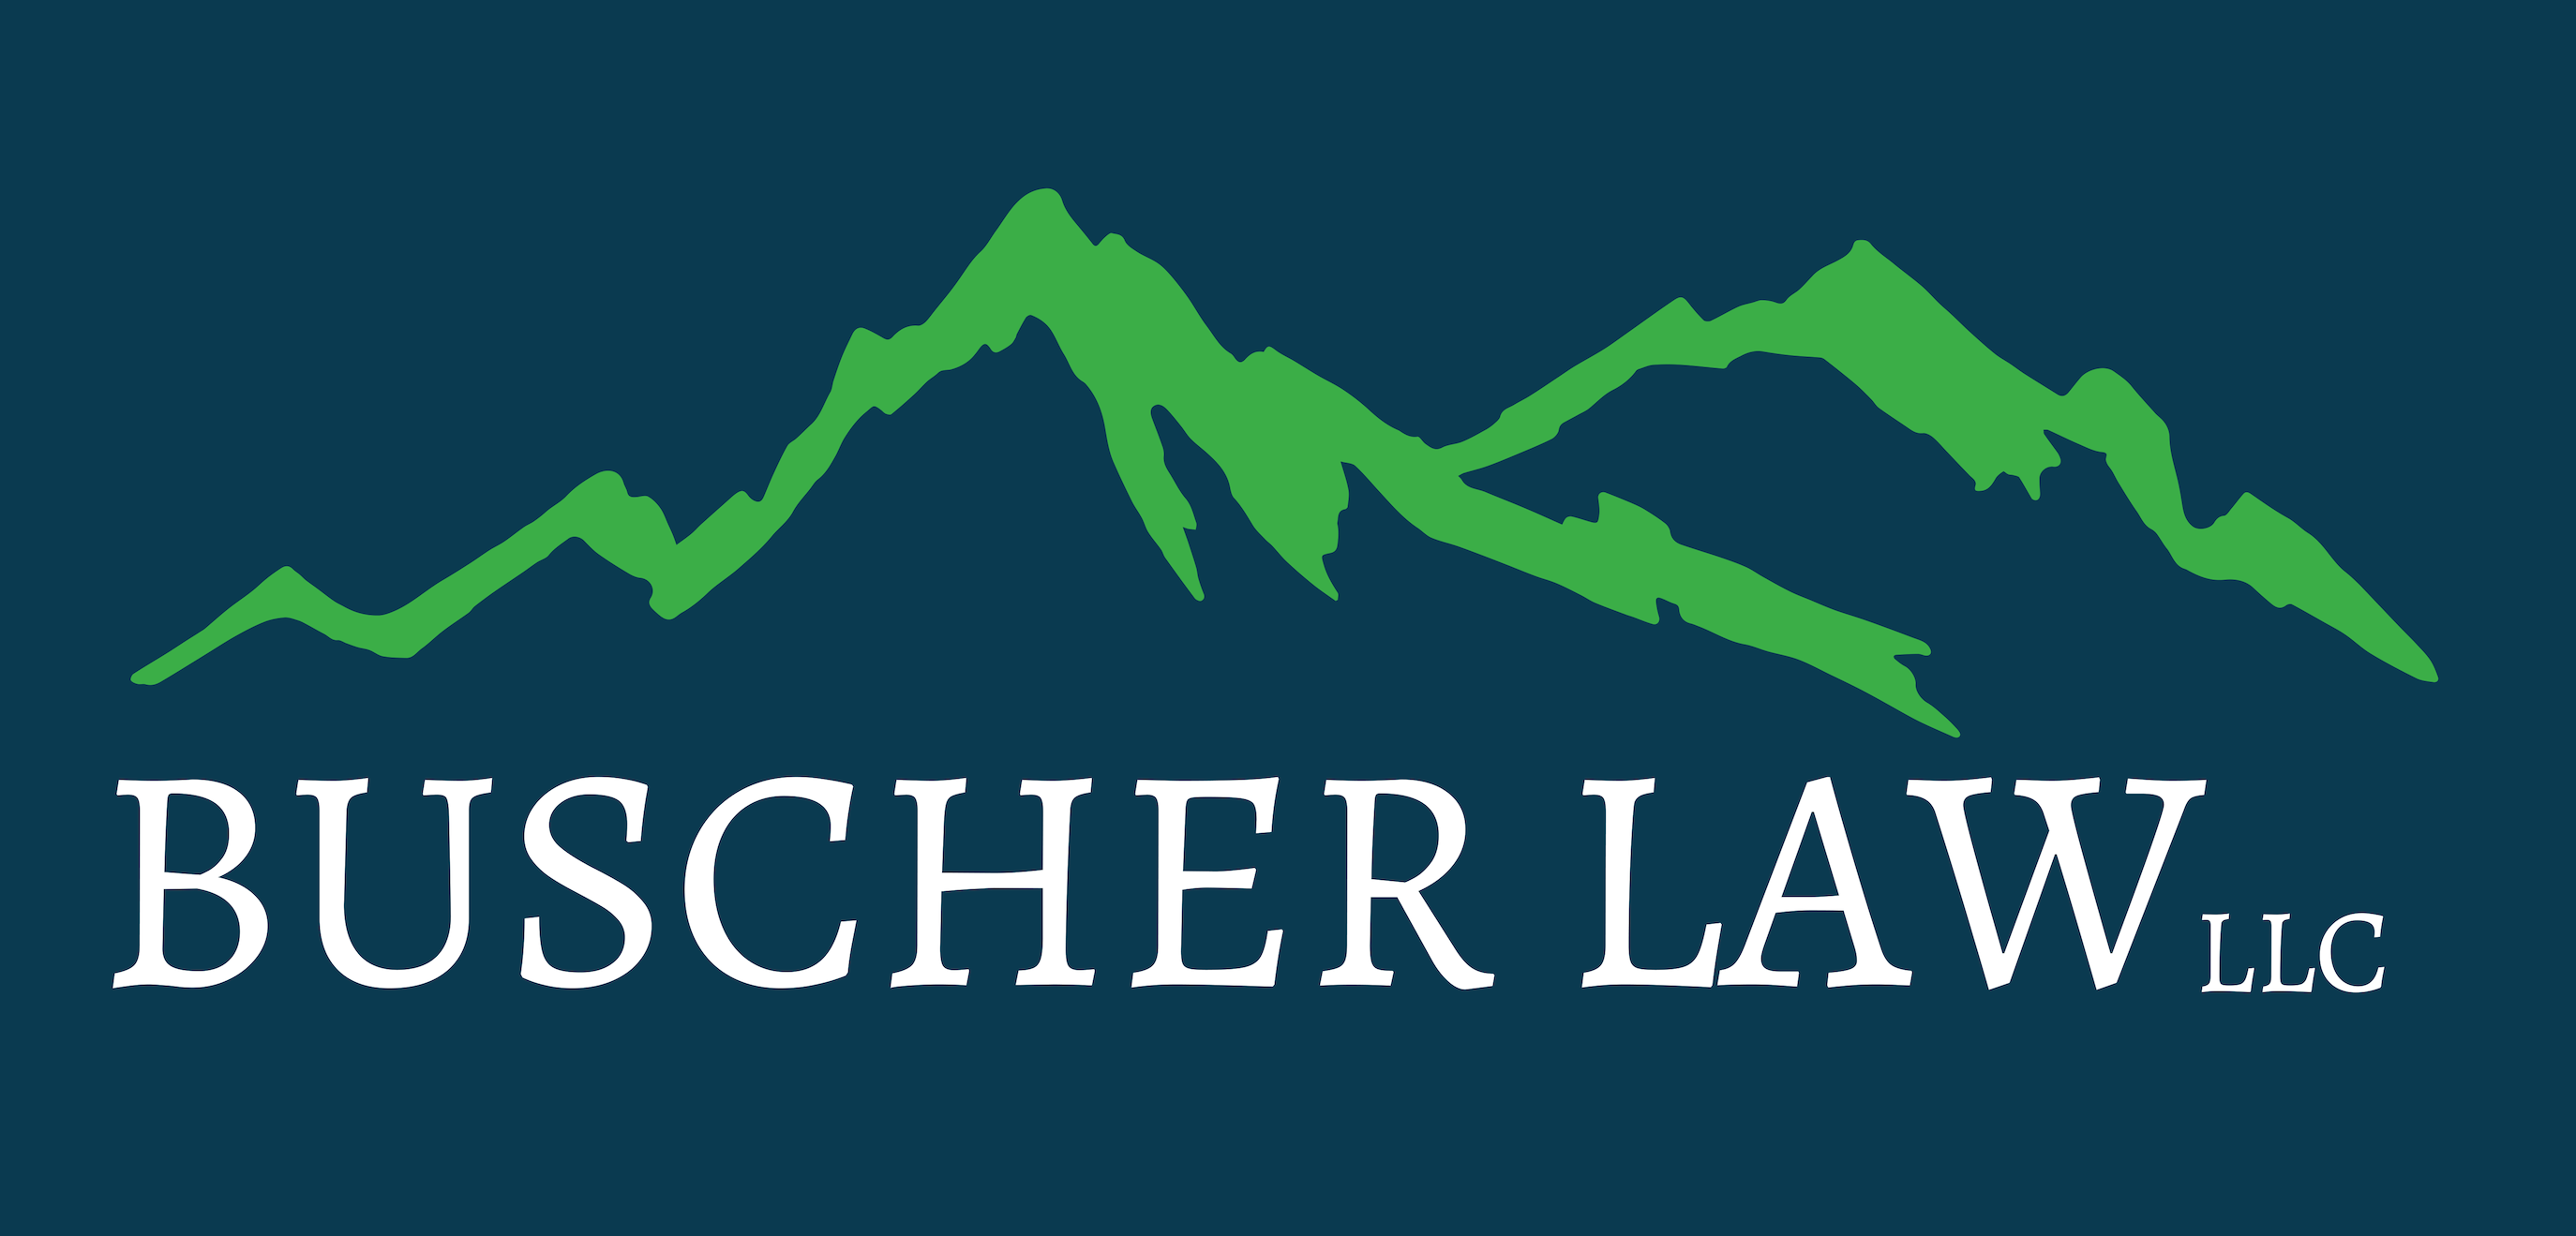 Buscher Law LLC - Seed Sponsor